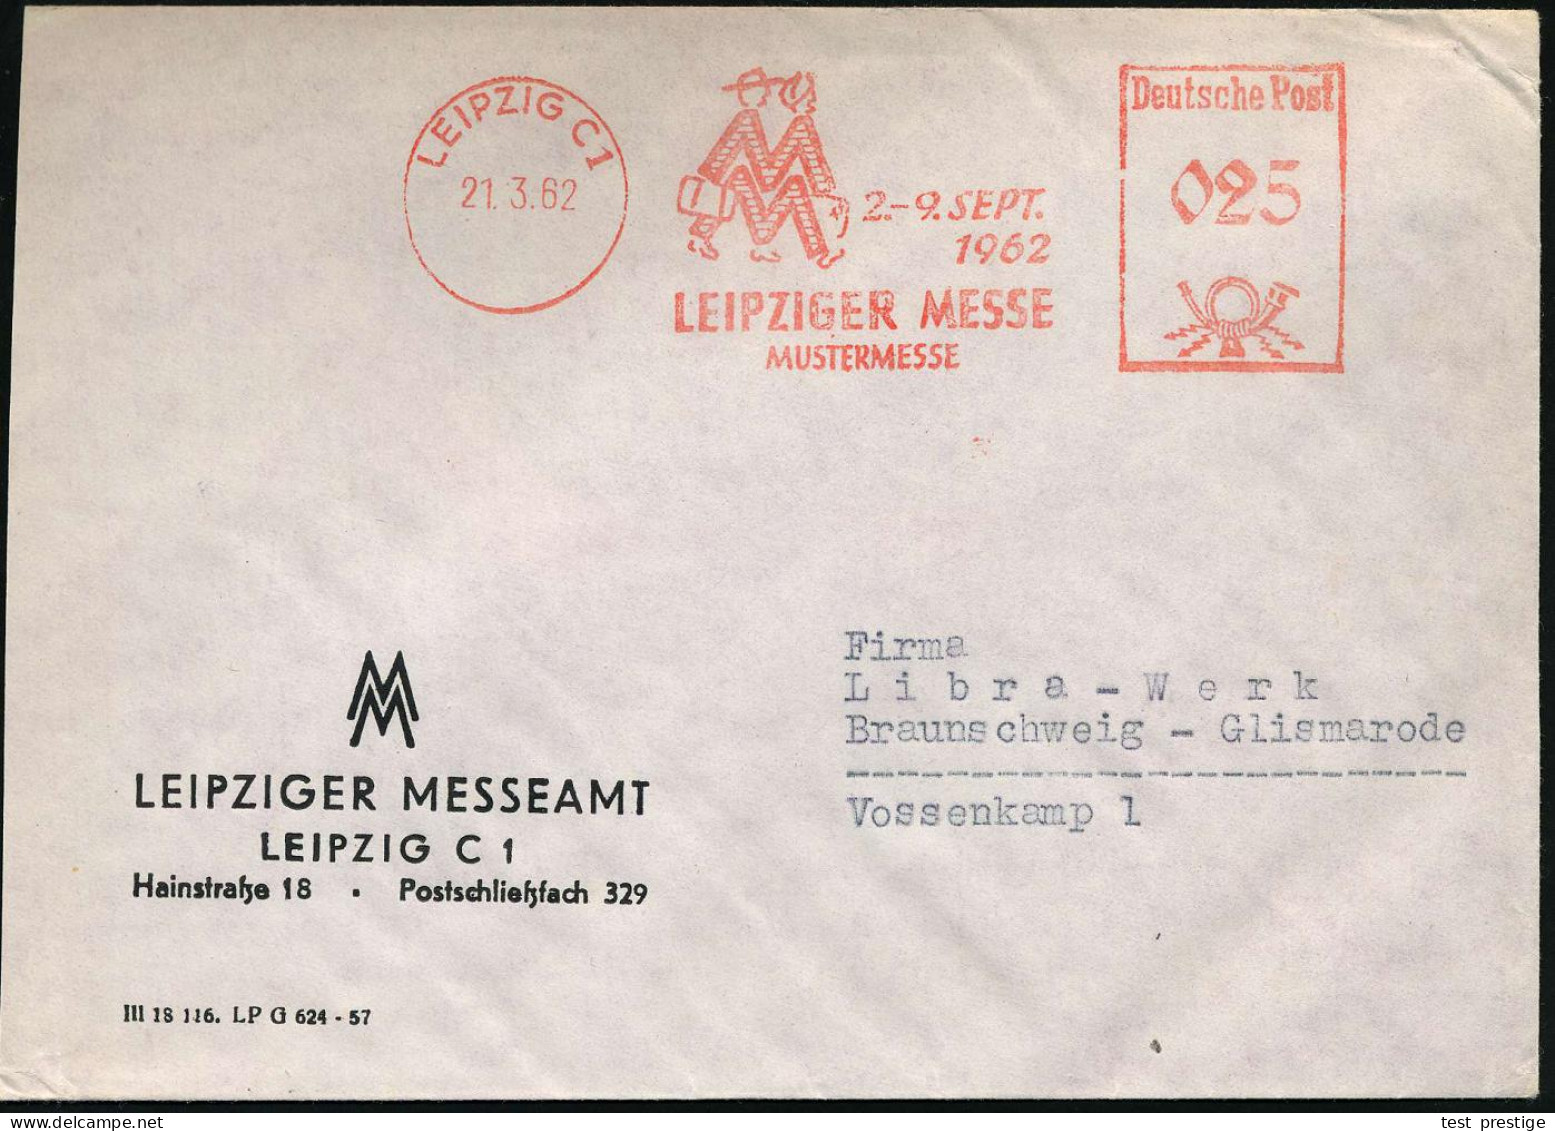 LEIPZIG C1/ 2.-9.SEPT./ 1962/ LEIPZ.MESSE/ MUSTERMESSE 1962 (21.3.) AFS Francotyp 025 Pf. (Messe-Logo: 2 Kofferträger) D - Autres